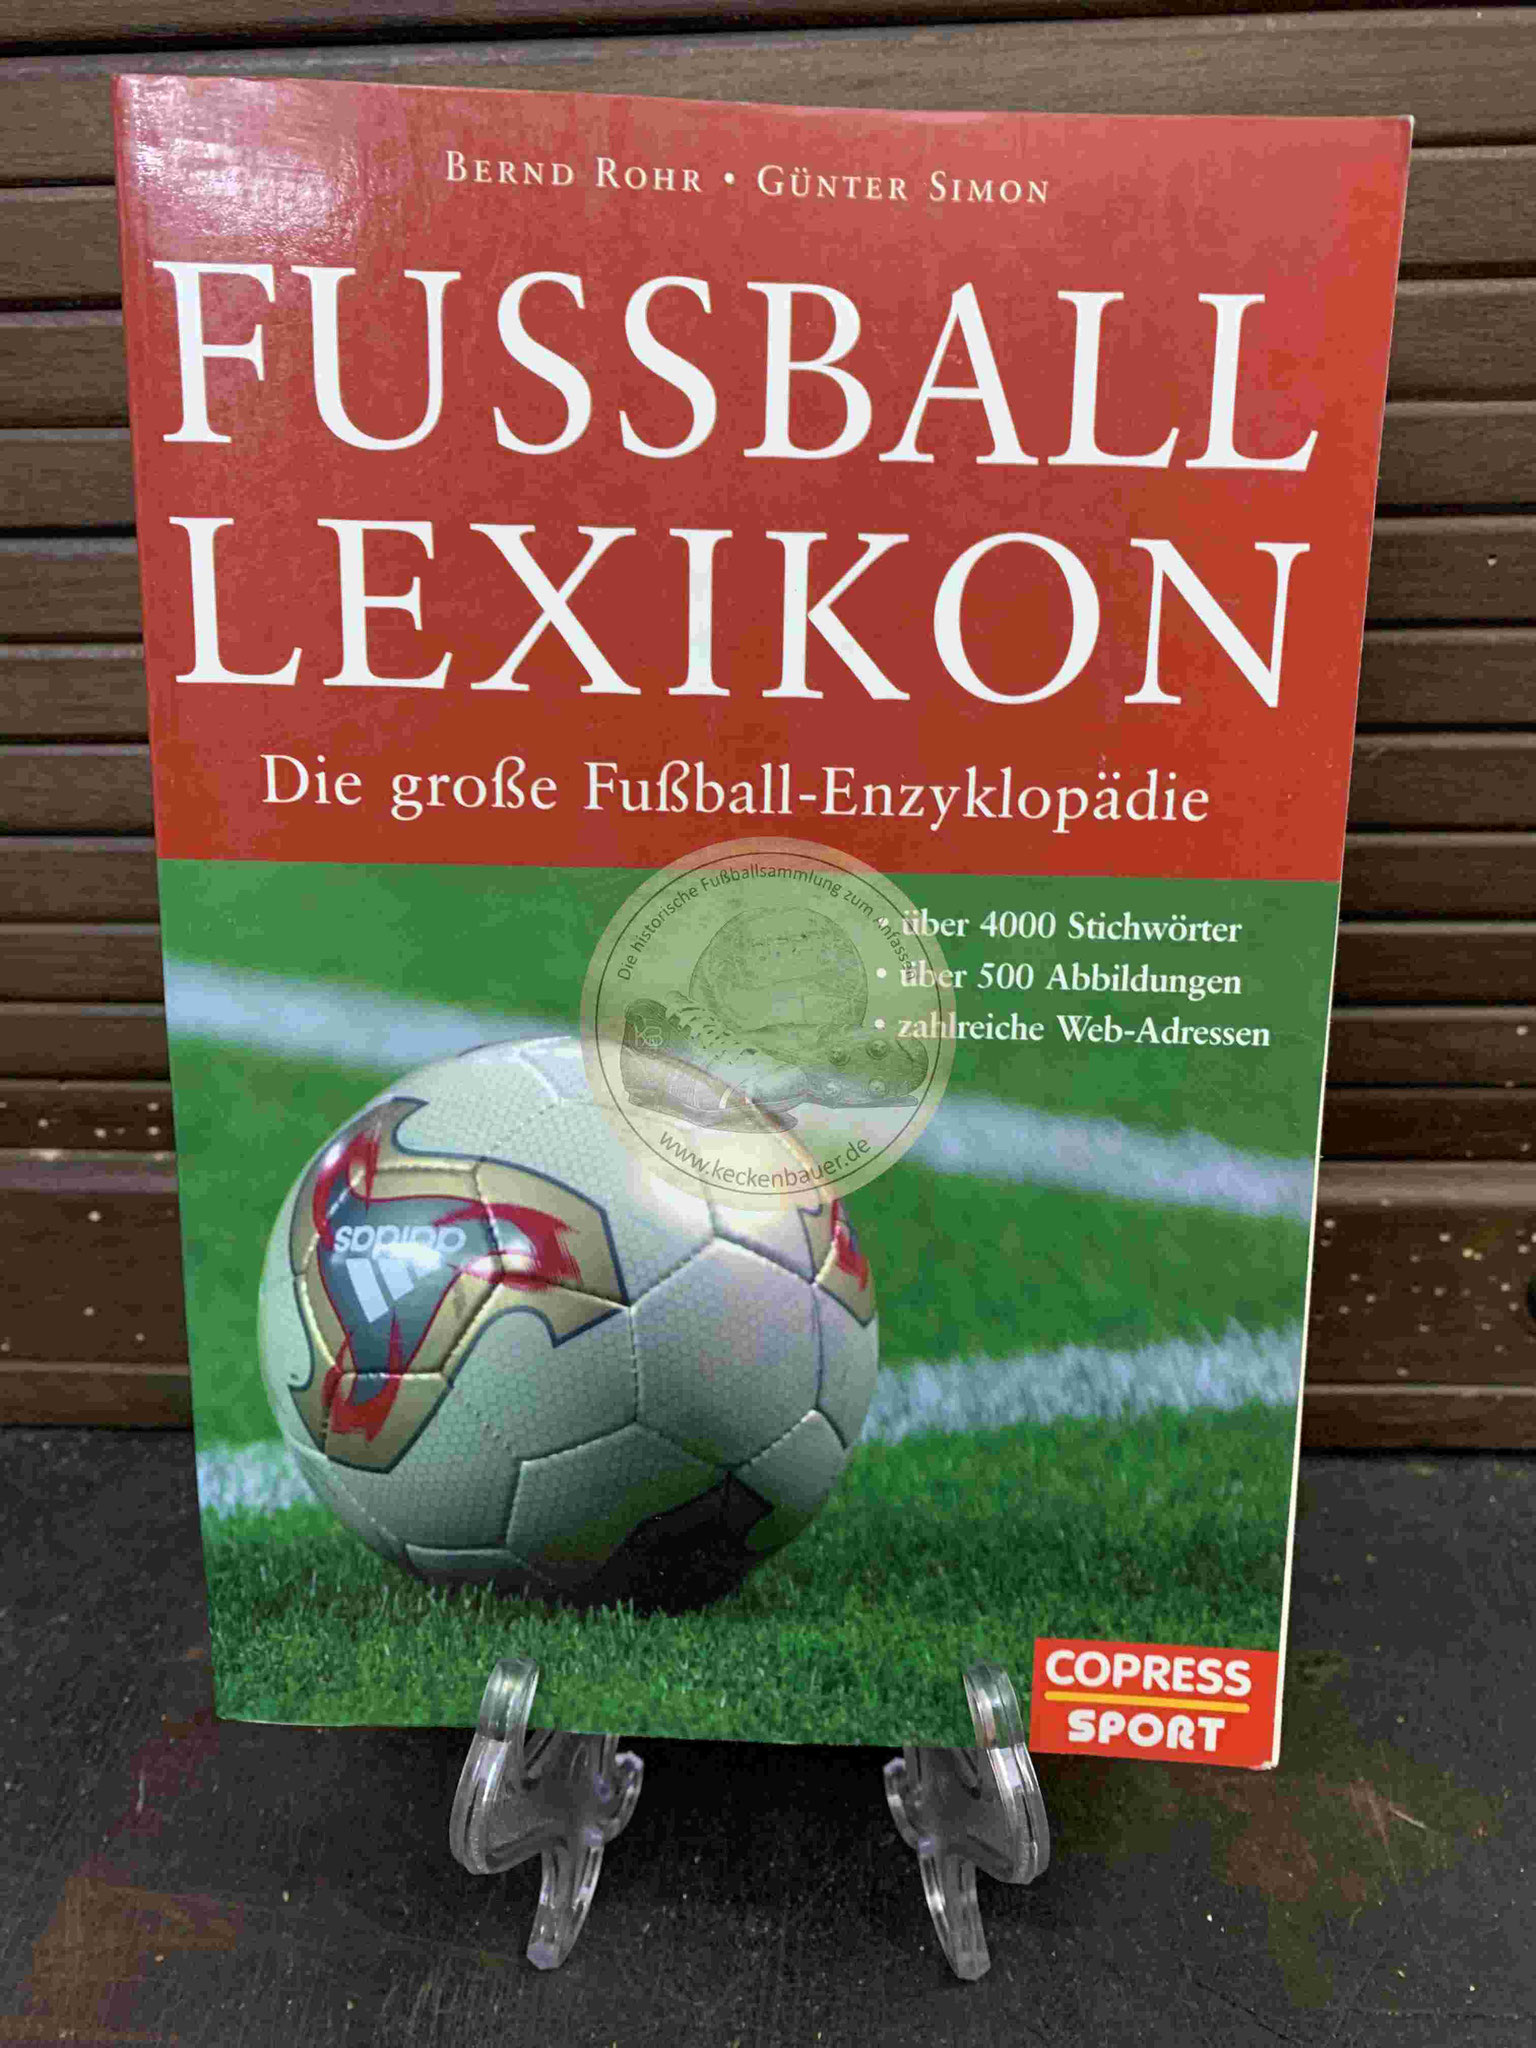 Fussball Lexikon aus dem Jahr 2004